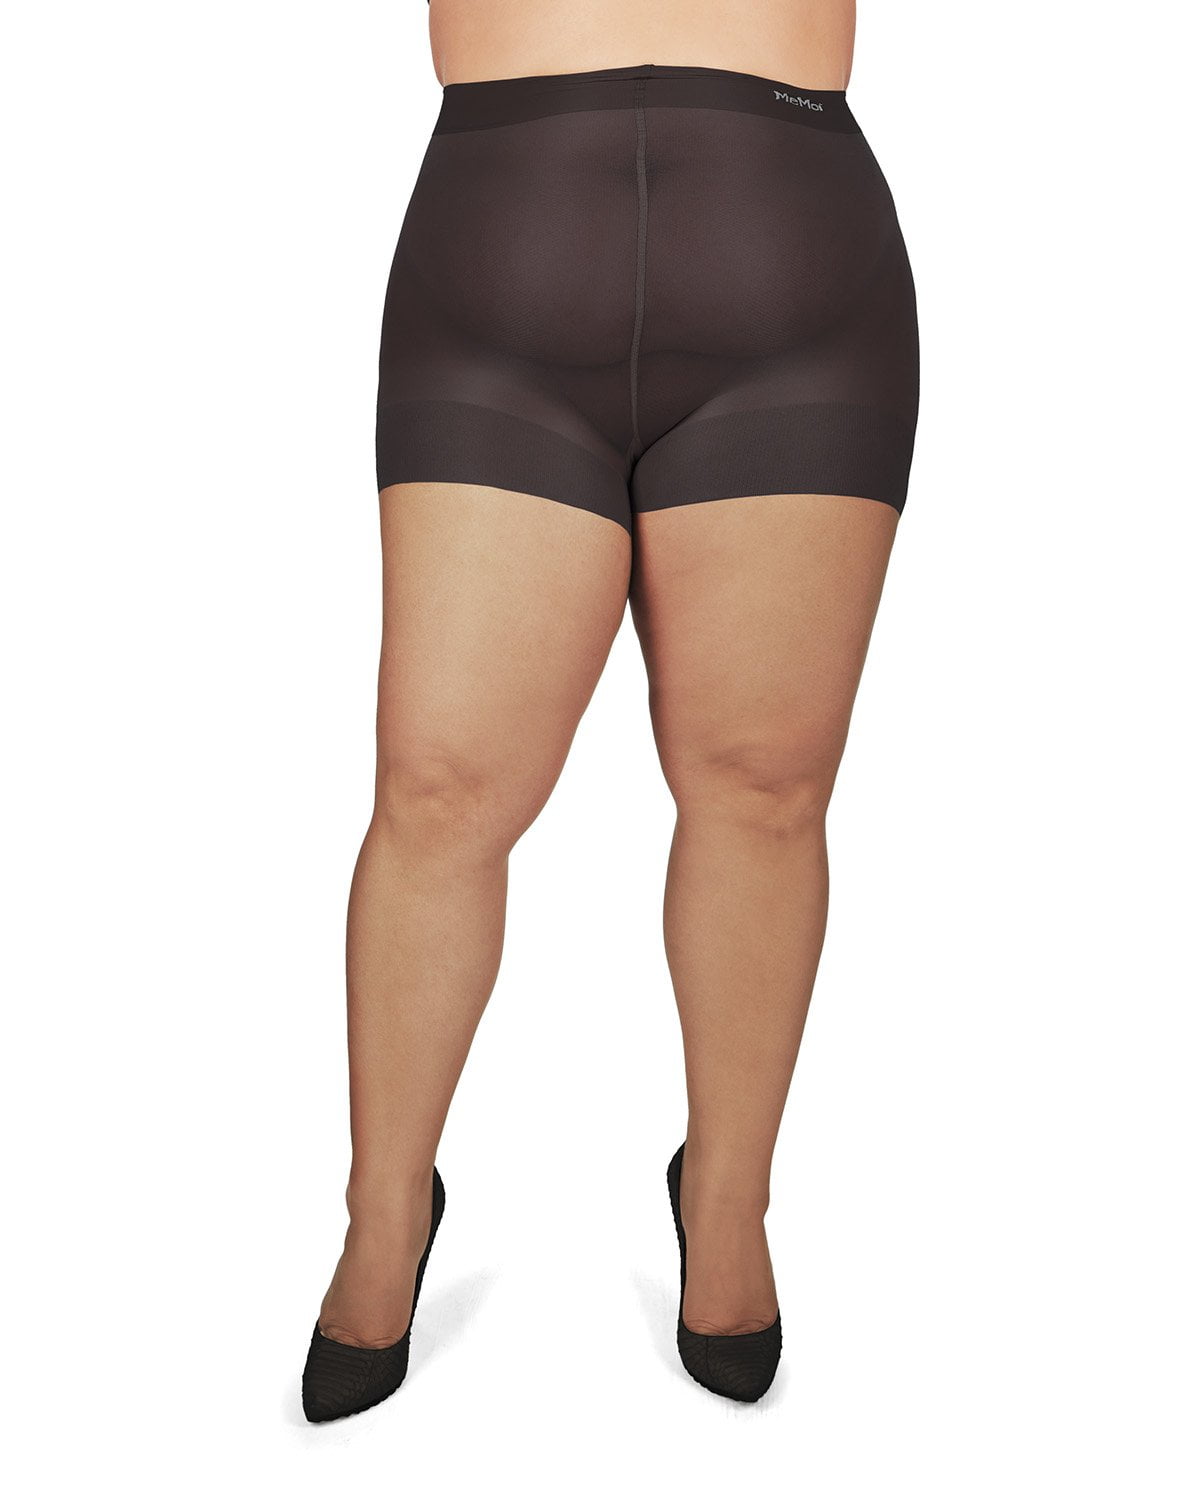 MeMoi Plus Size Curvy Ultra Sheer Control Top Pantyhose X X Off Black Walmart Com